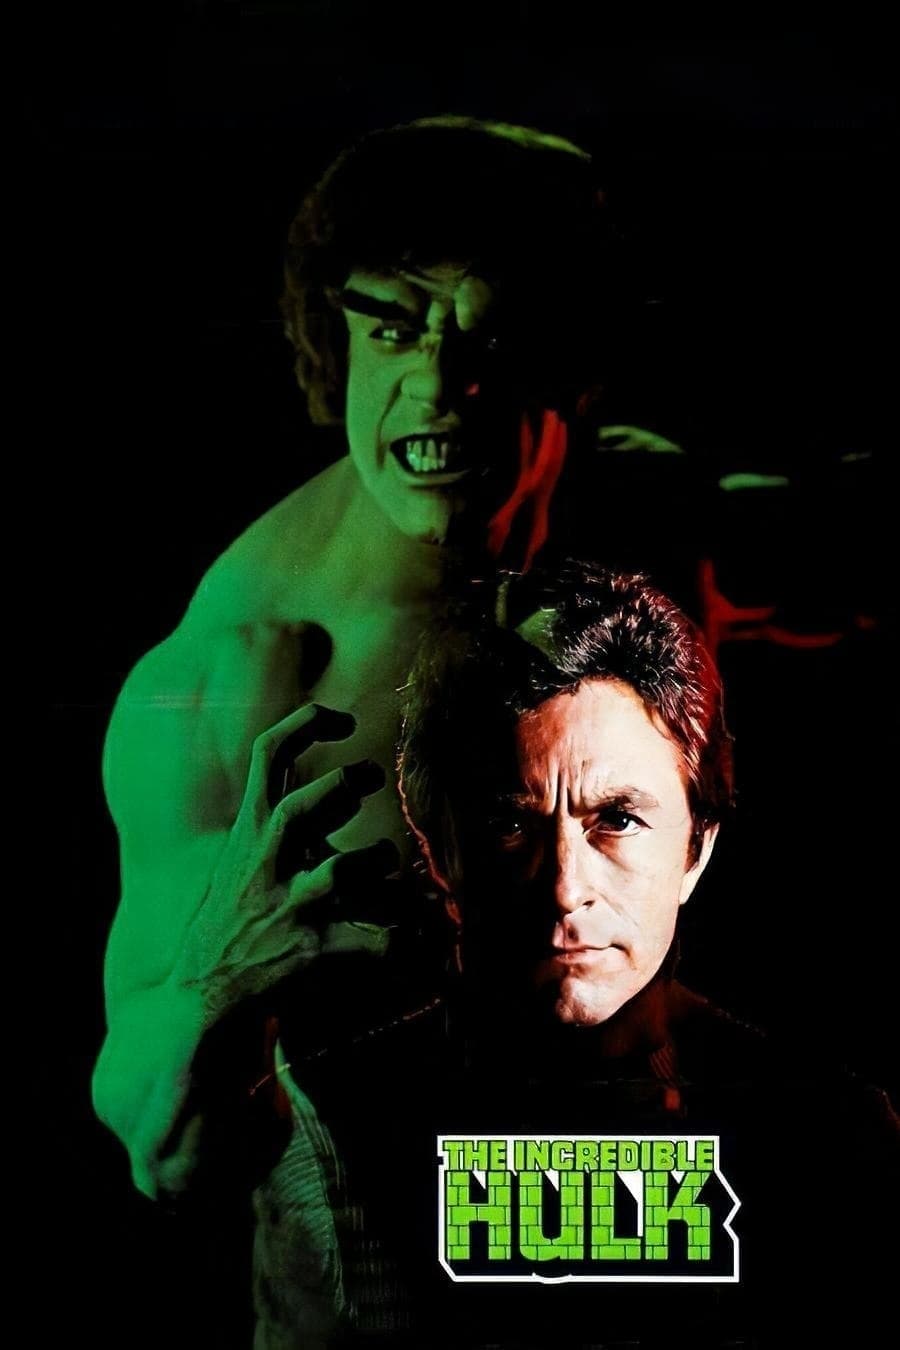 O Incrível Hulk (1977)